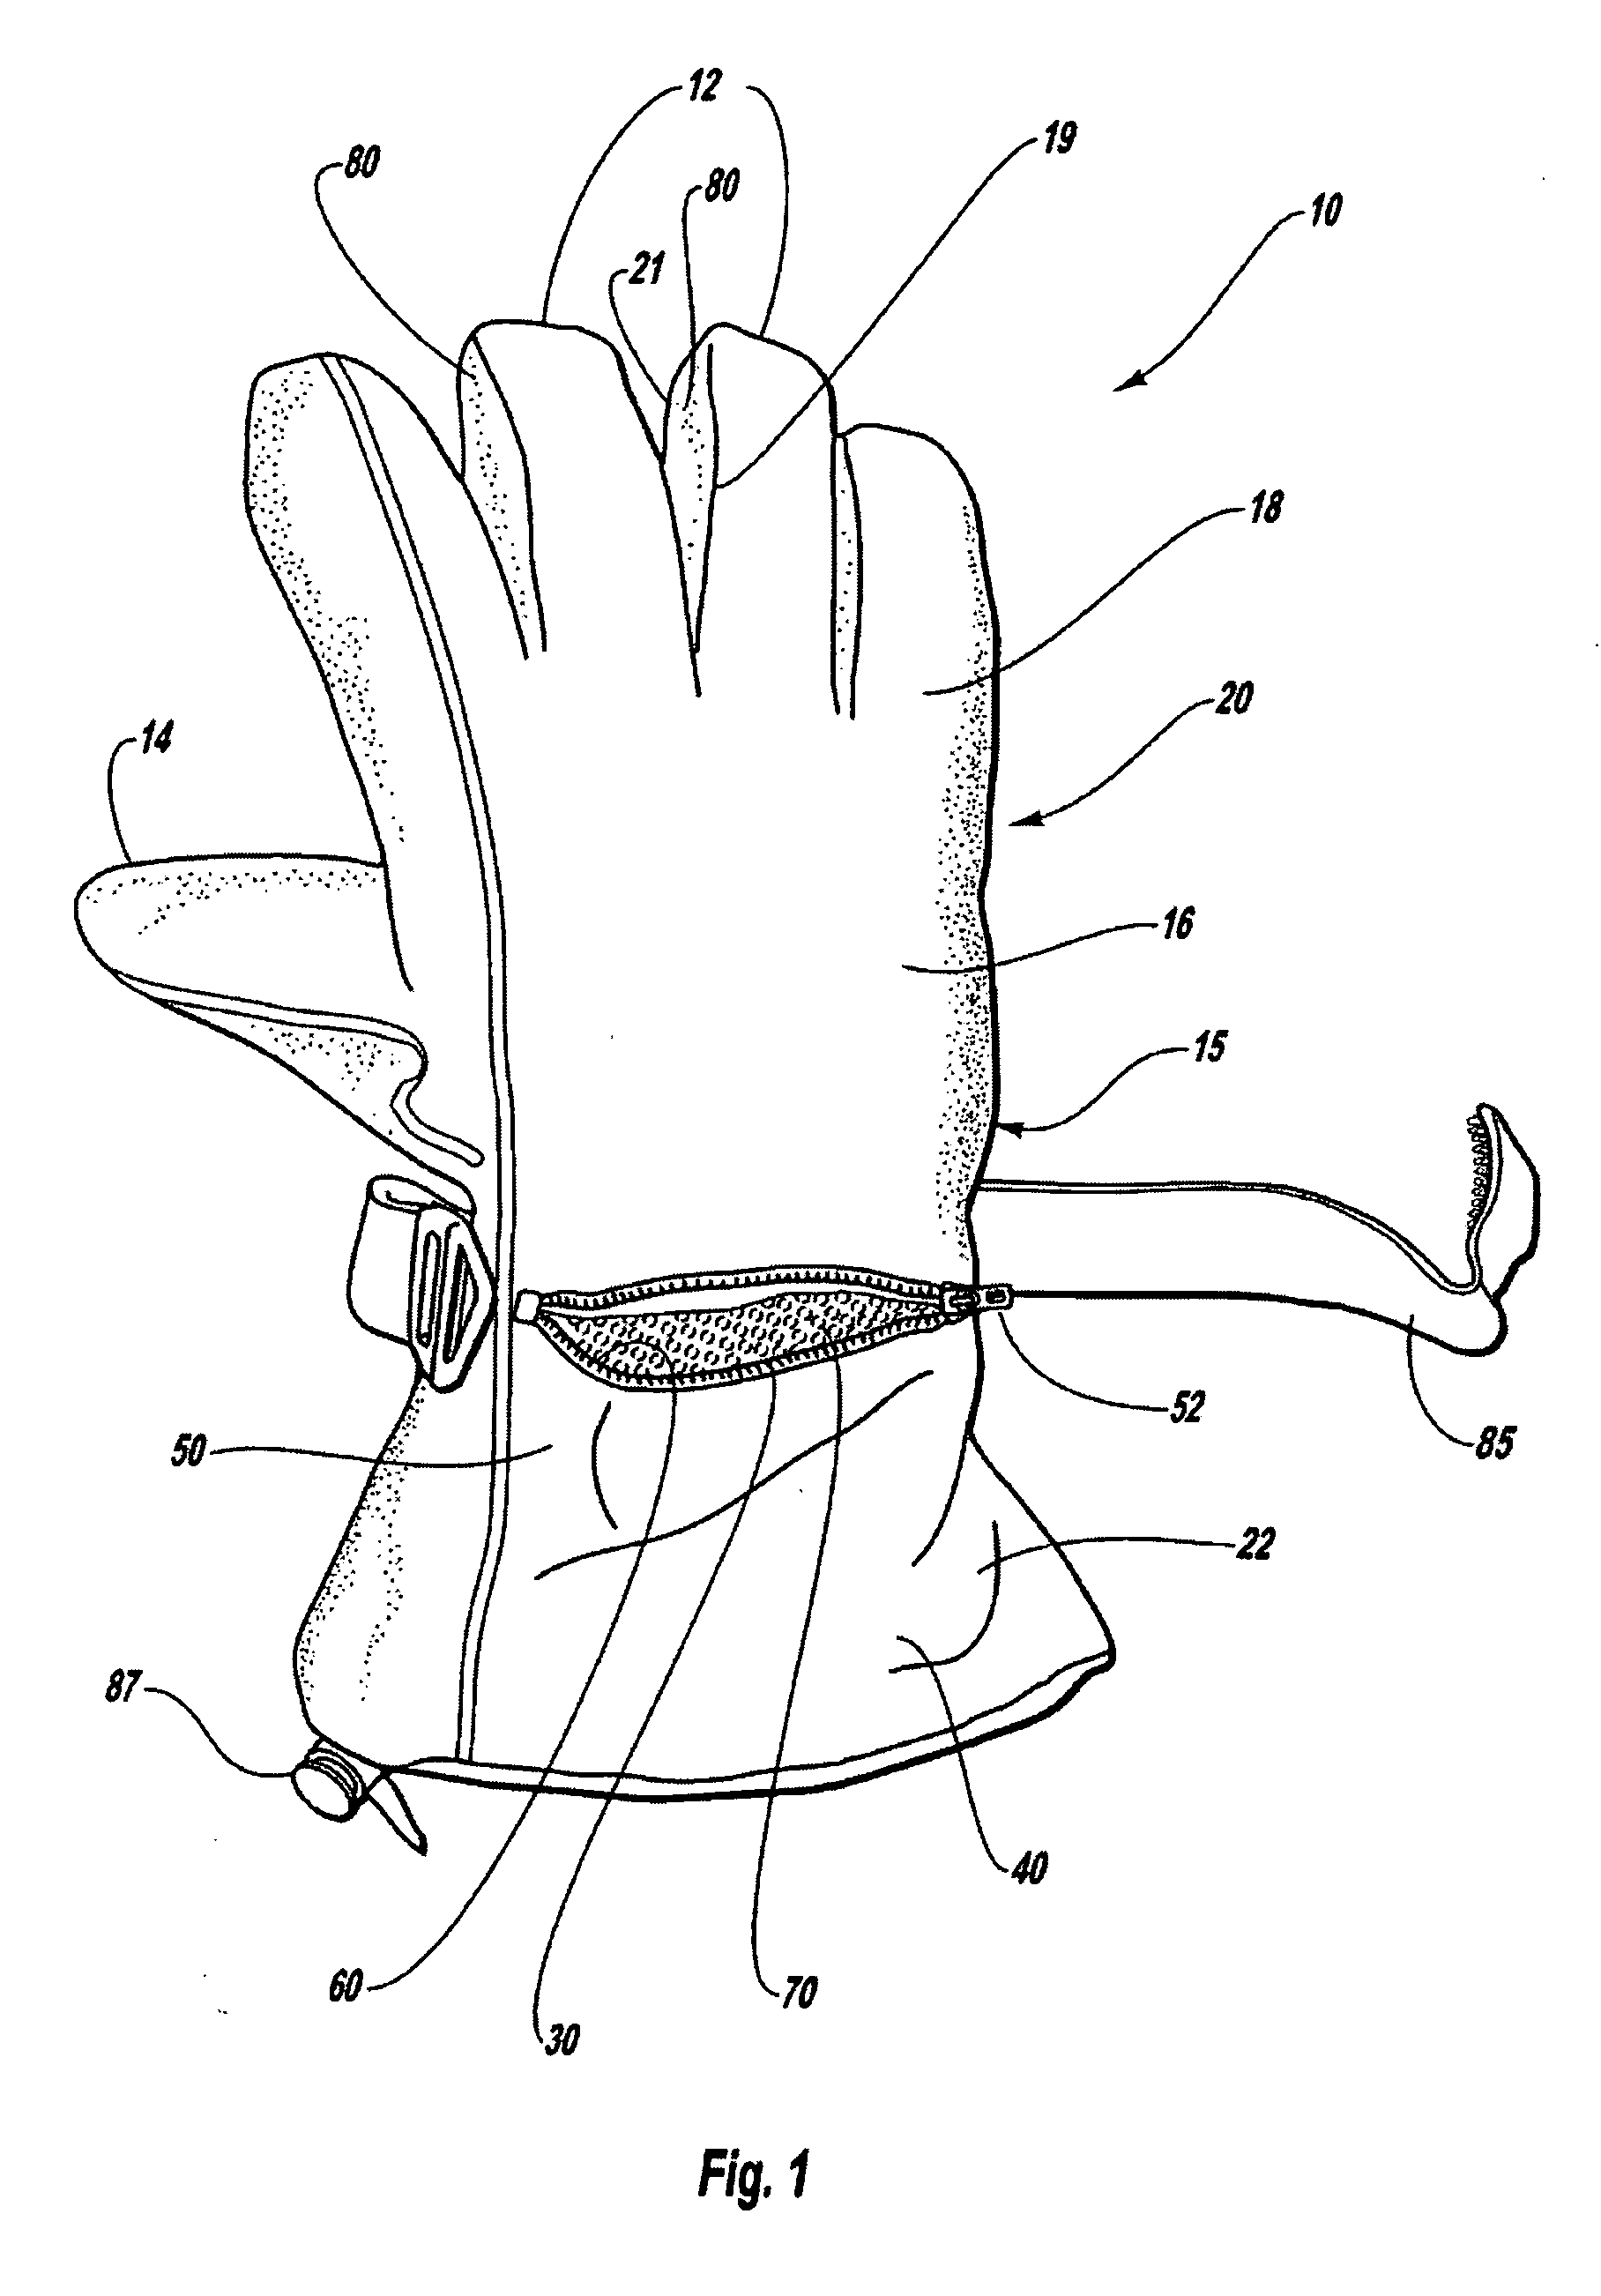 Glove with flow-through pocket